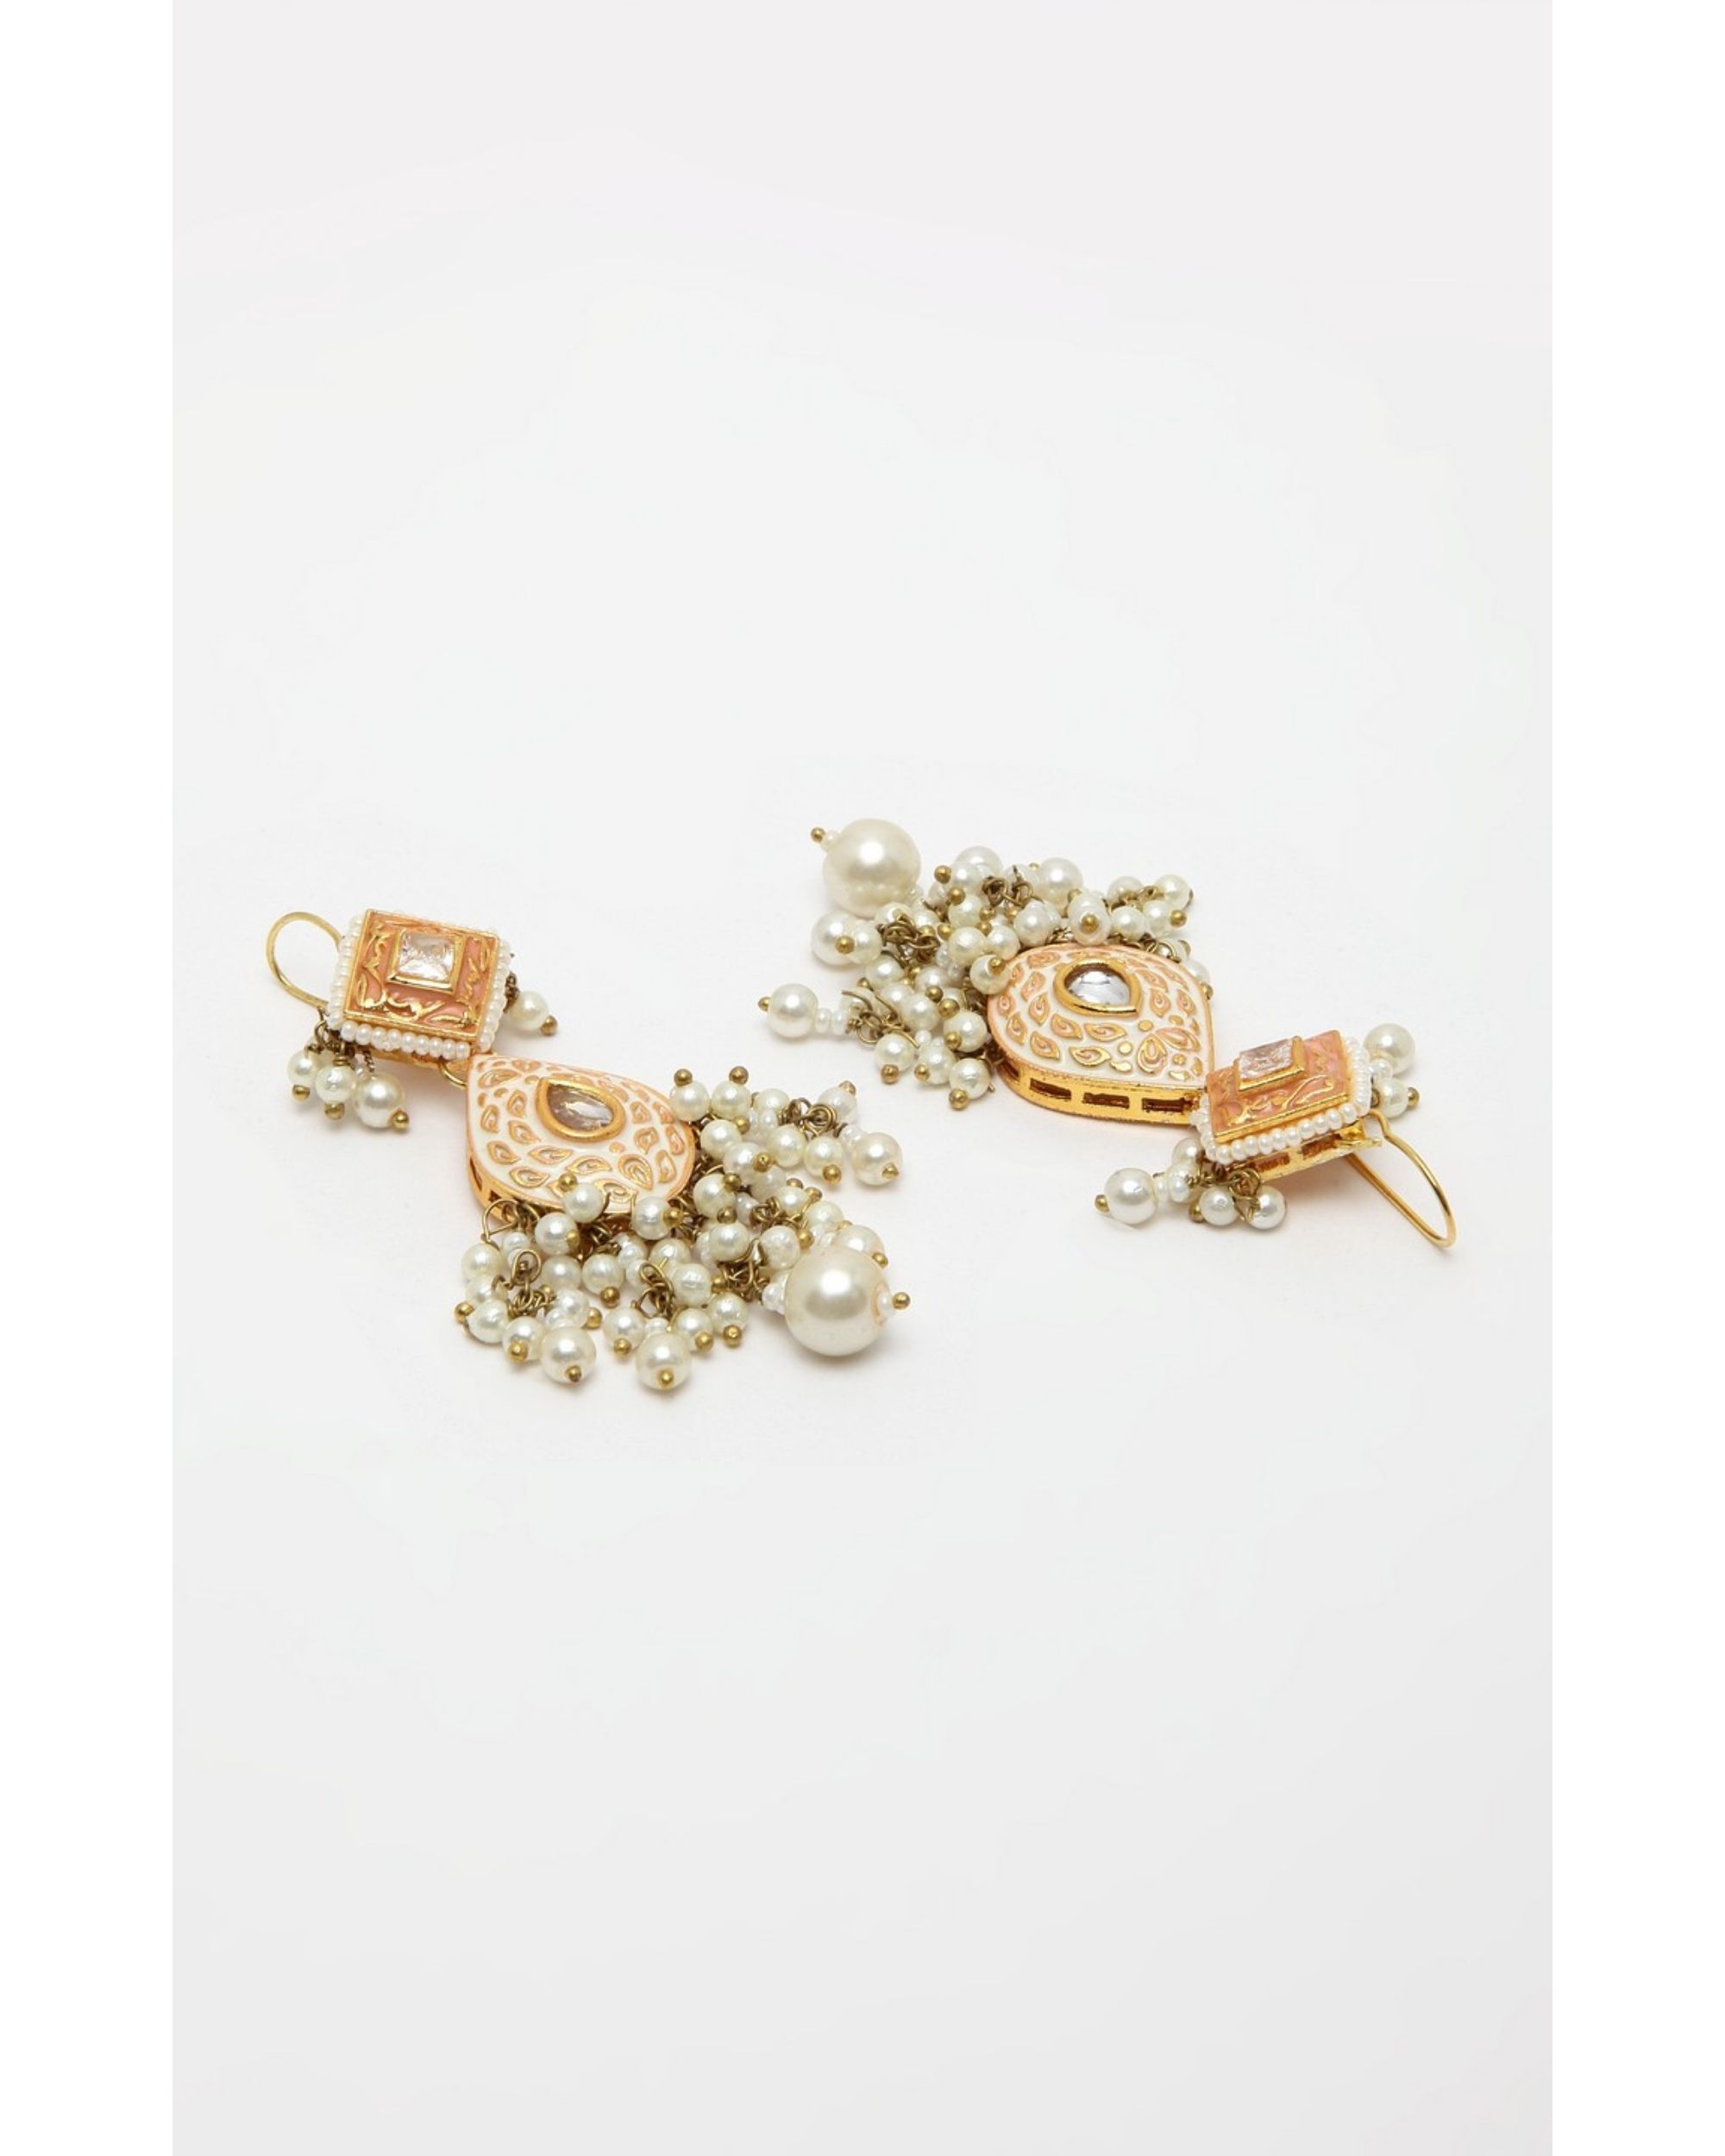 Pearl pink dangler earrings by Dugri Style | The Secret Label